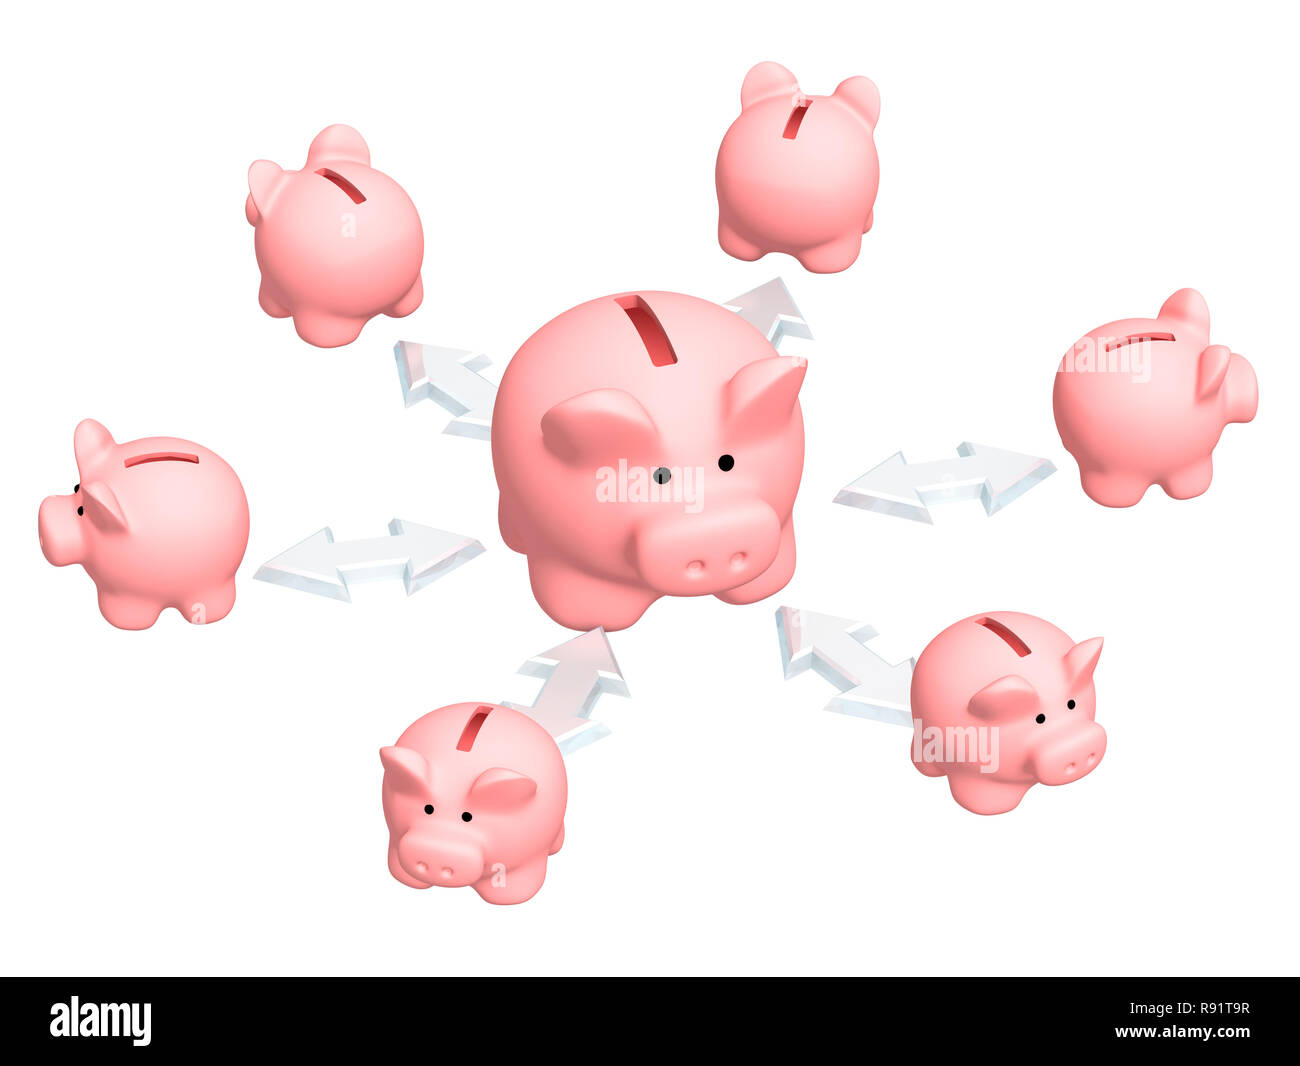 Conceptual image - distribution of finances Stock Photo